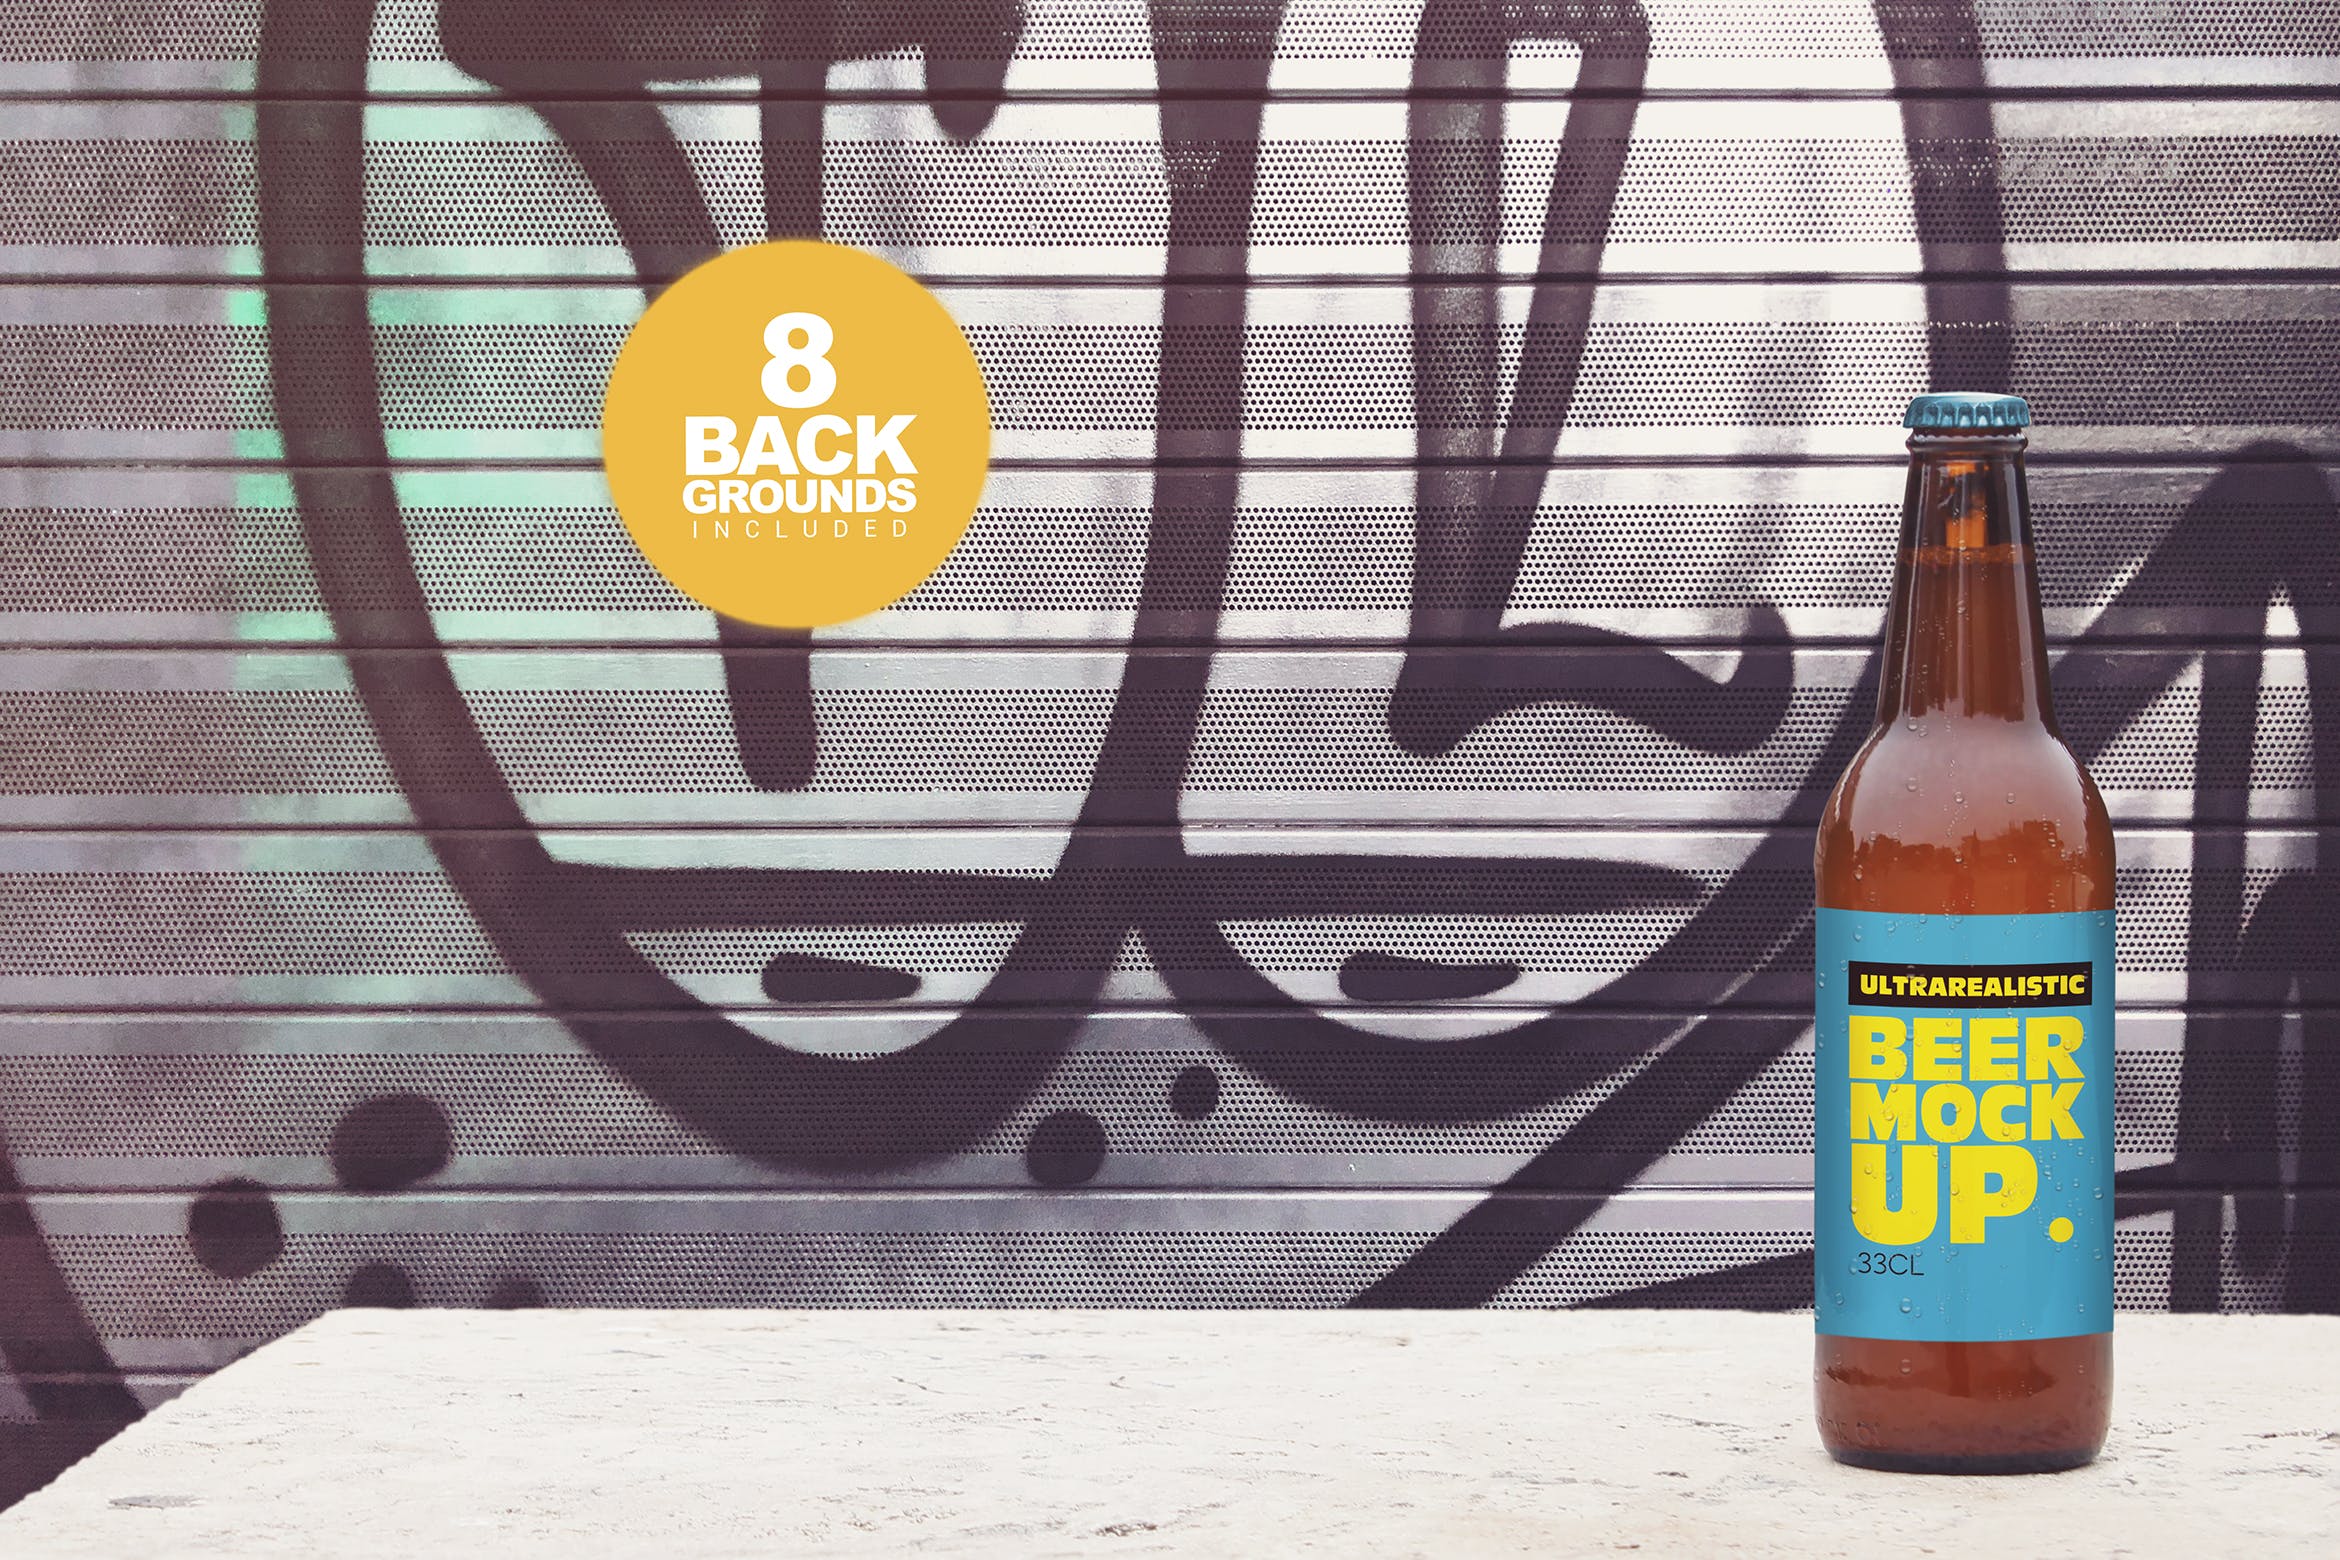 50cl啤酒瓶外观设计预览蚂蚁素材精选 50cl Garage Beer Mockup插图